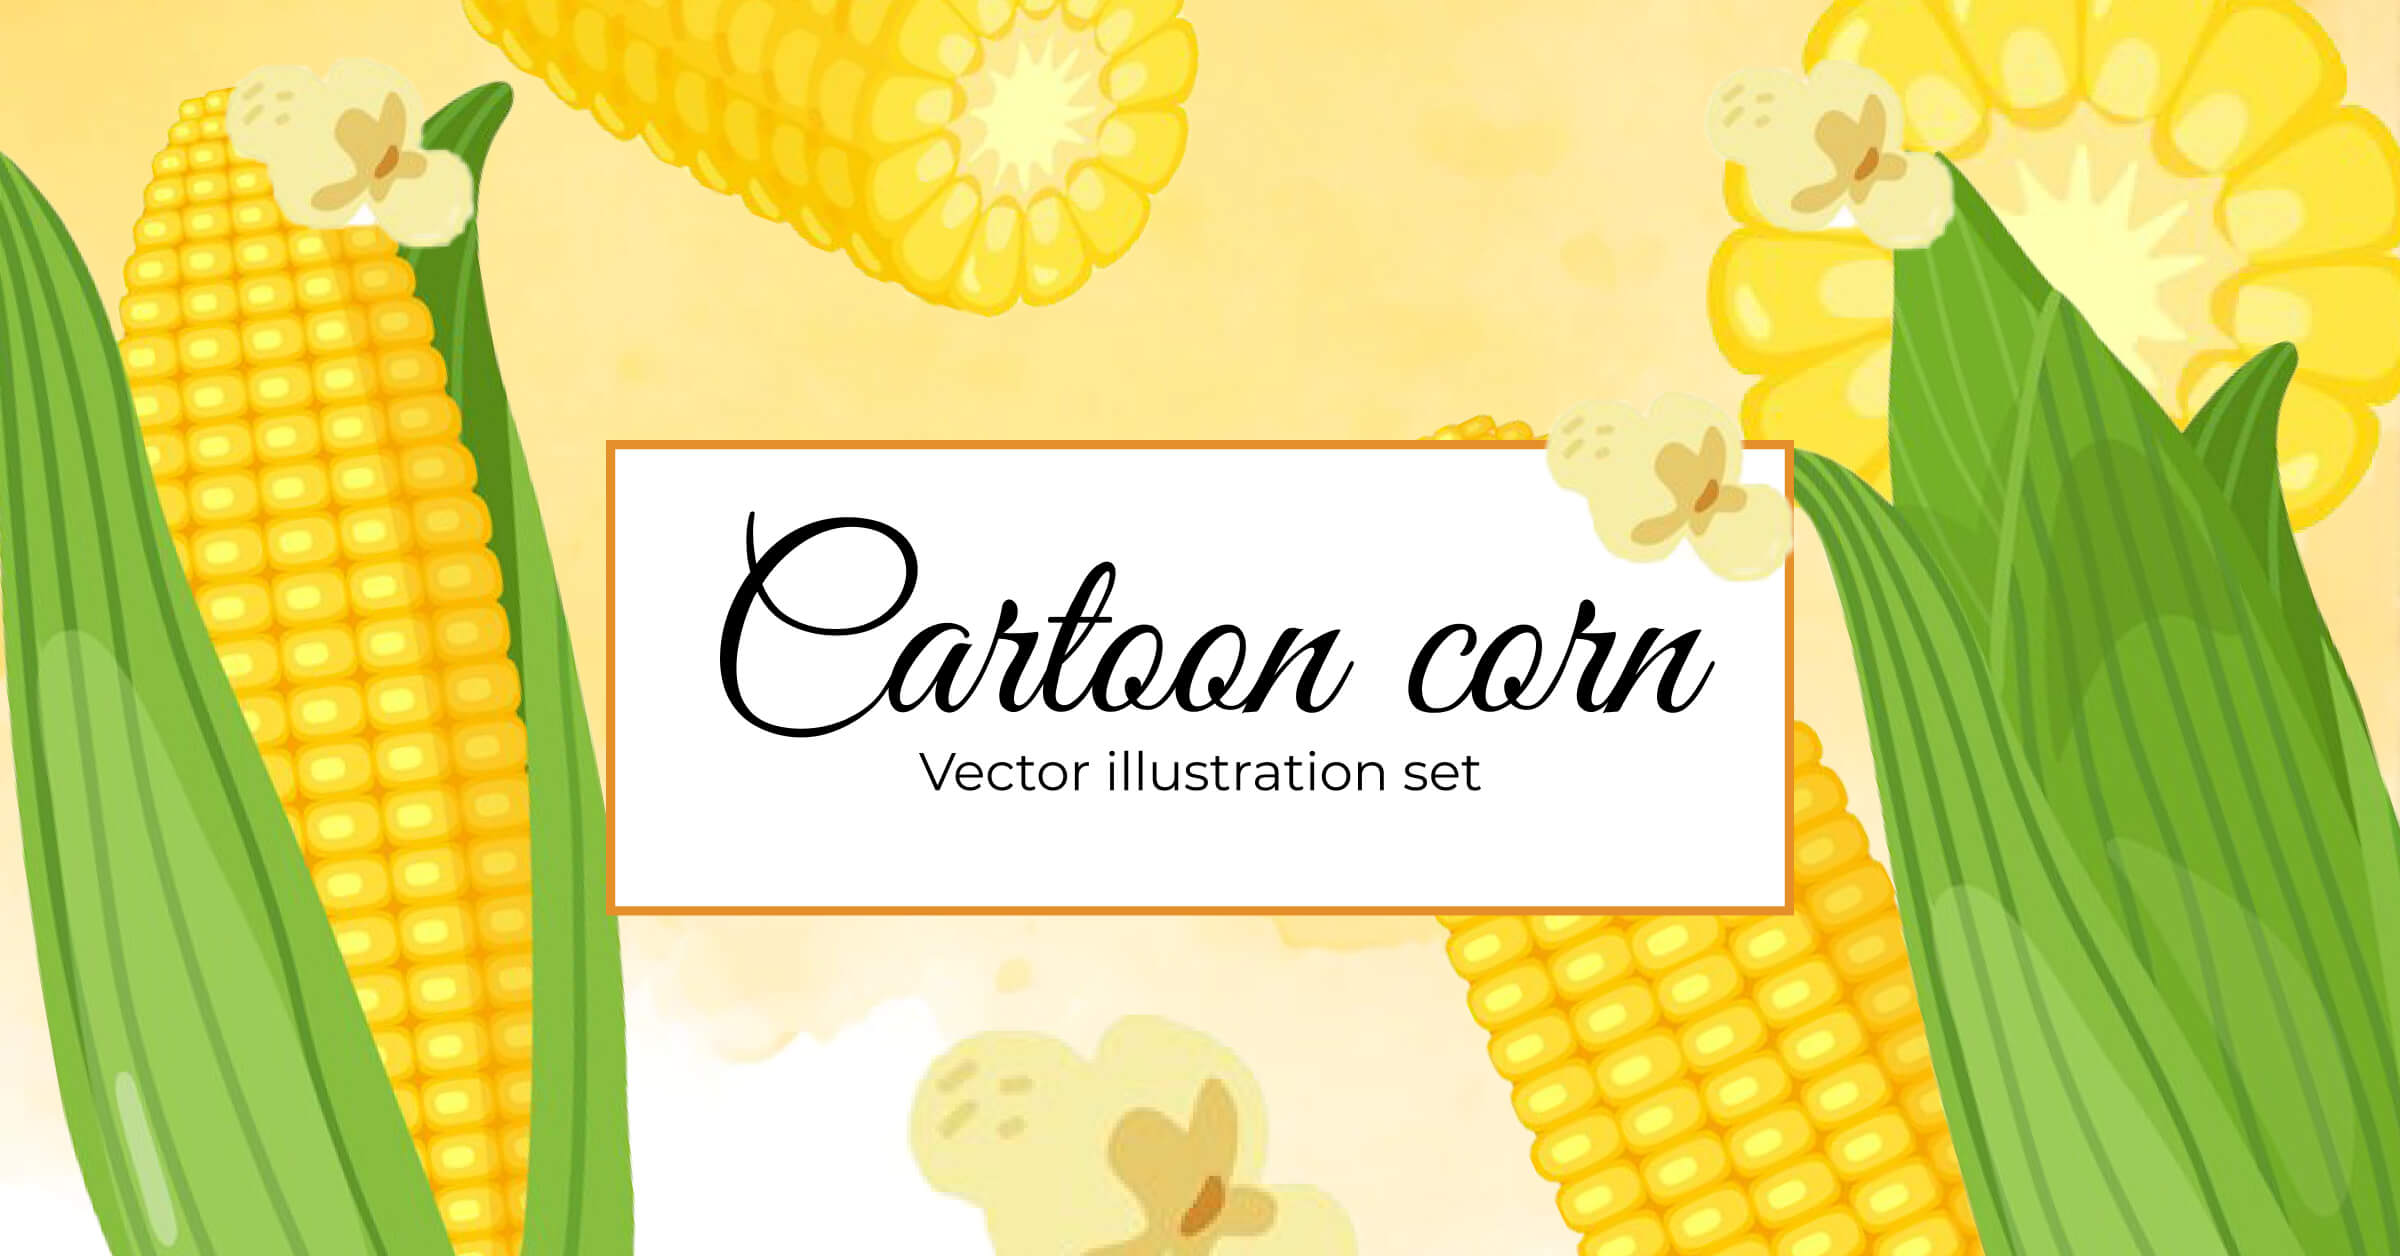 Cartoon corn vector illustration set.